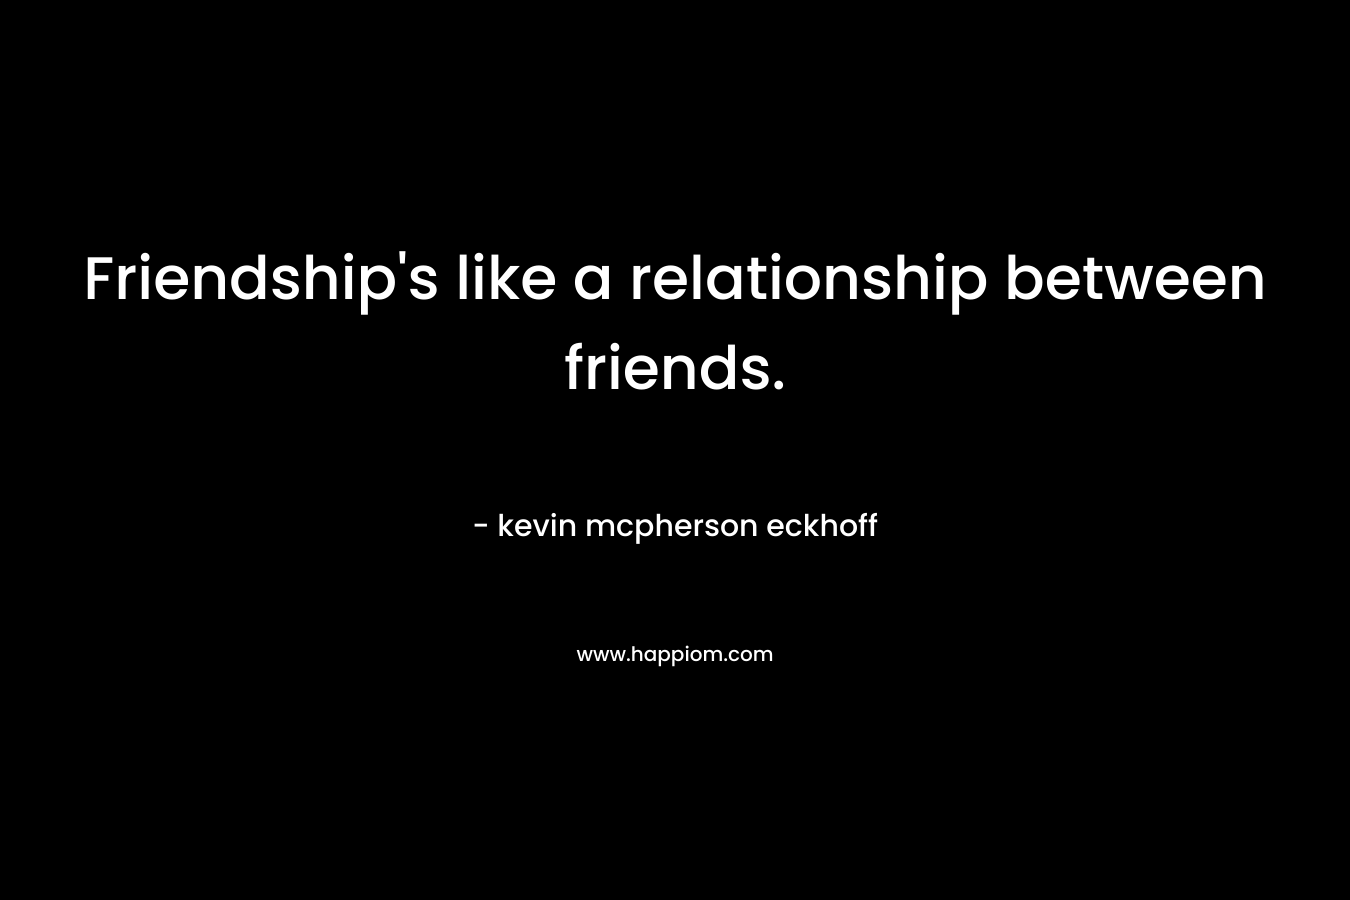 Friendship's like a relationship between friends.